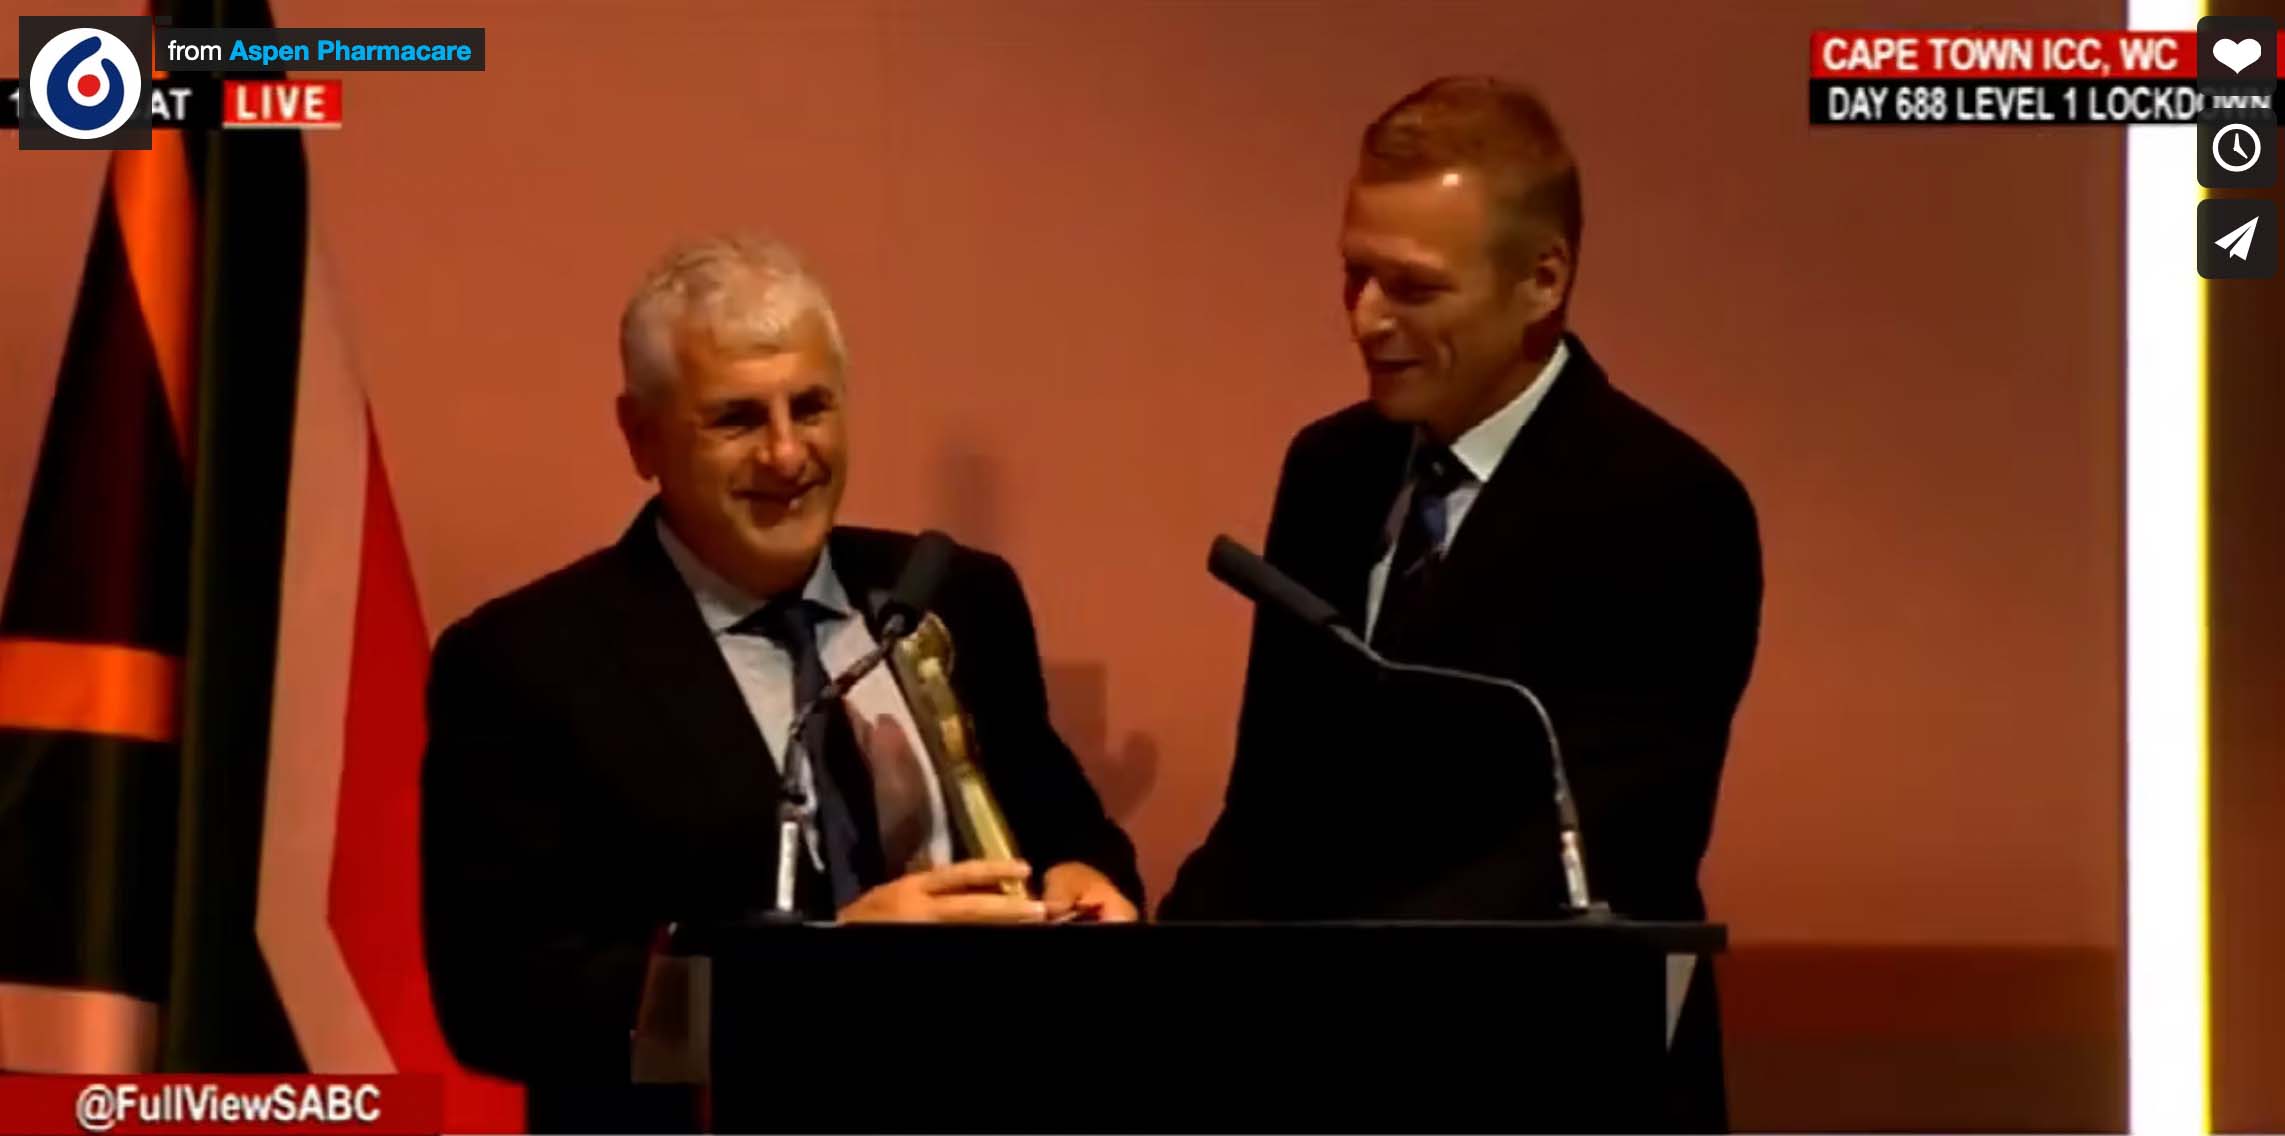 Stephen Saad's Ubuntu Award acceptance speech